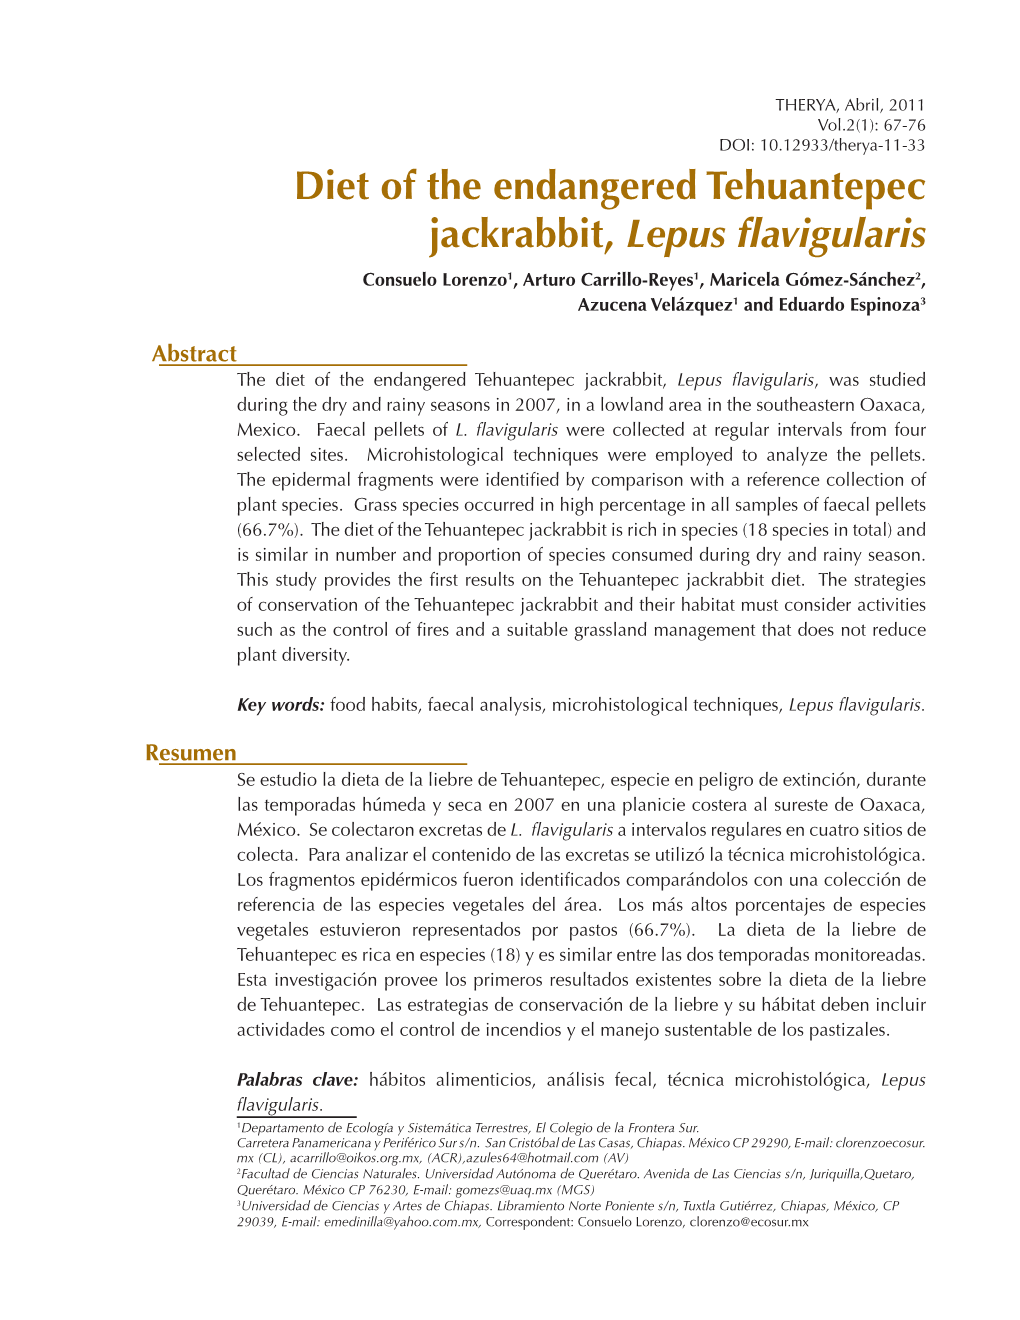 Diet of the Endangered Tehuantepec Jackrabbit, Lepus Flavigularis